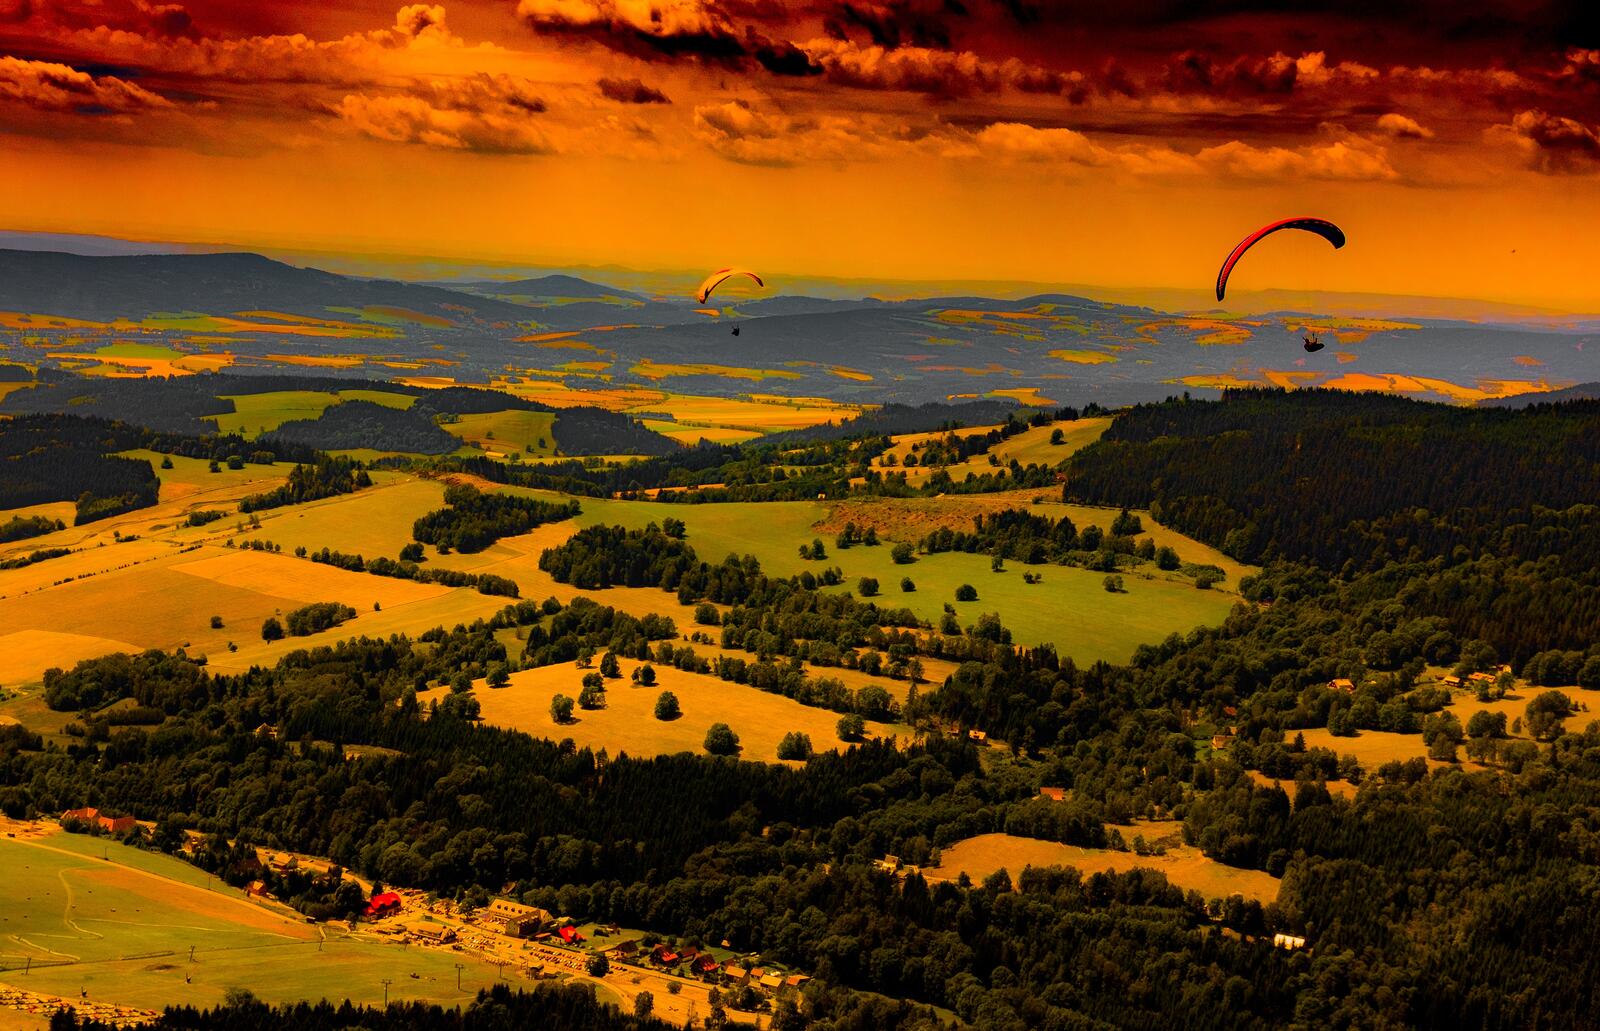 Бесплатное фото Летим на параплане над полями во время восхода солнца